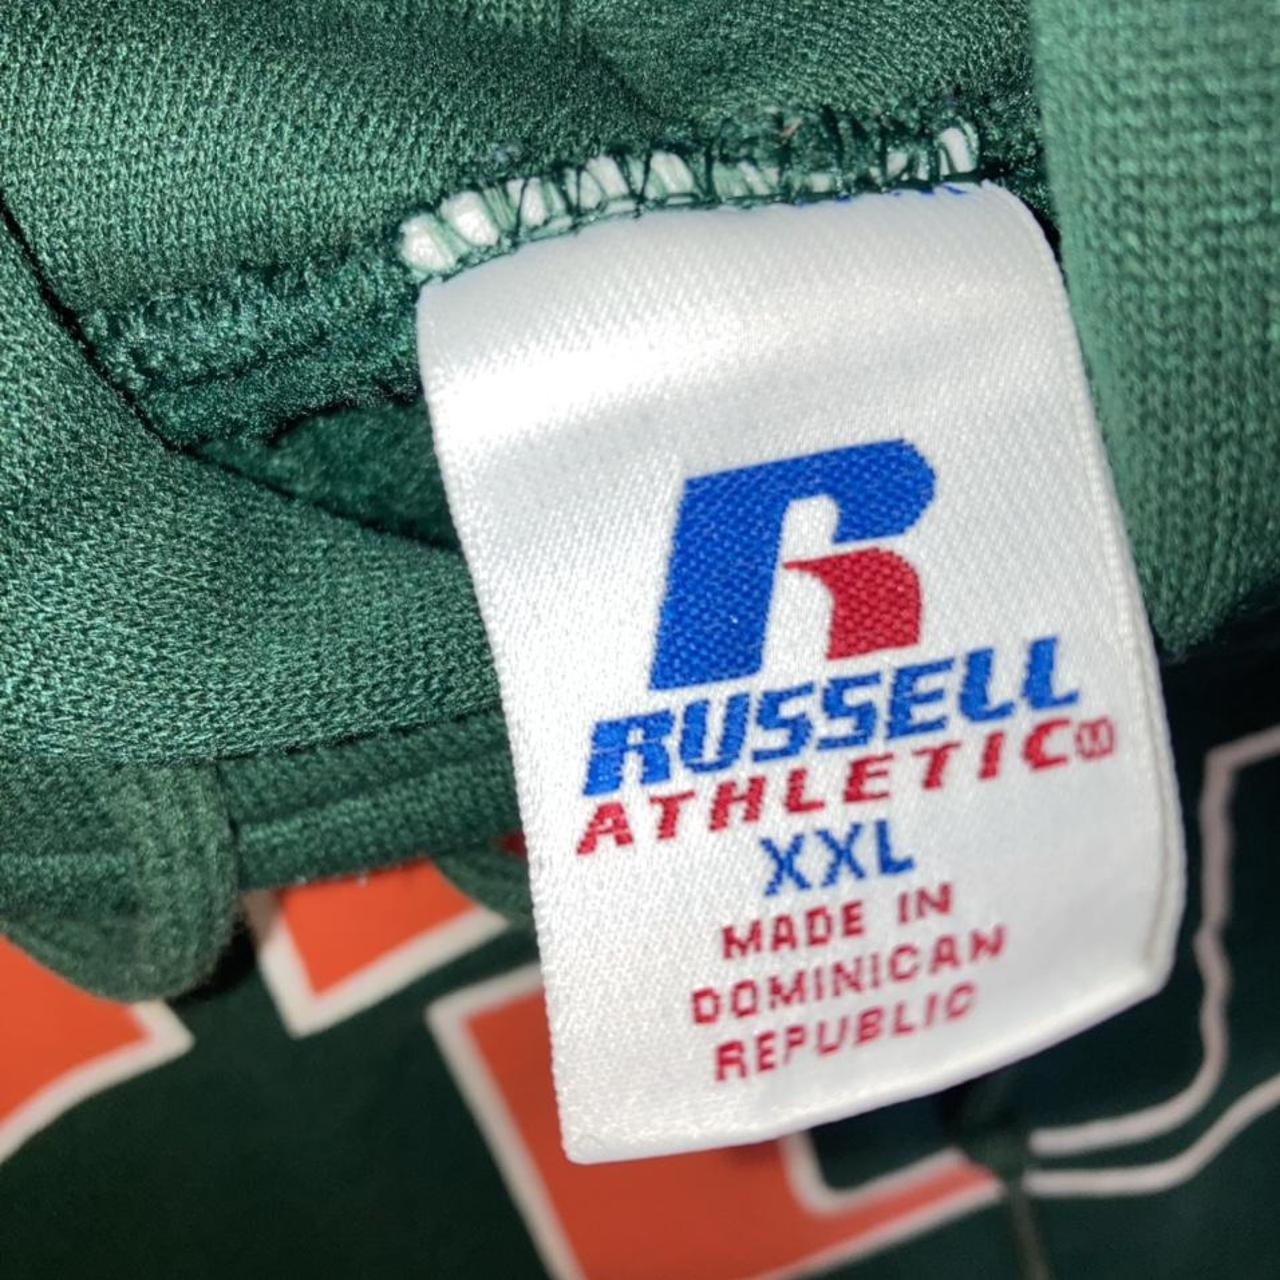 Russell Athletic Men's Green and Orange Sweatshirt (3)